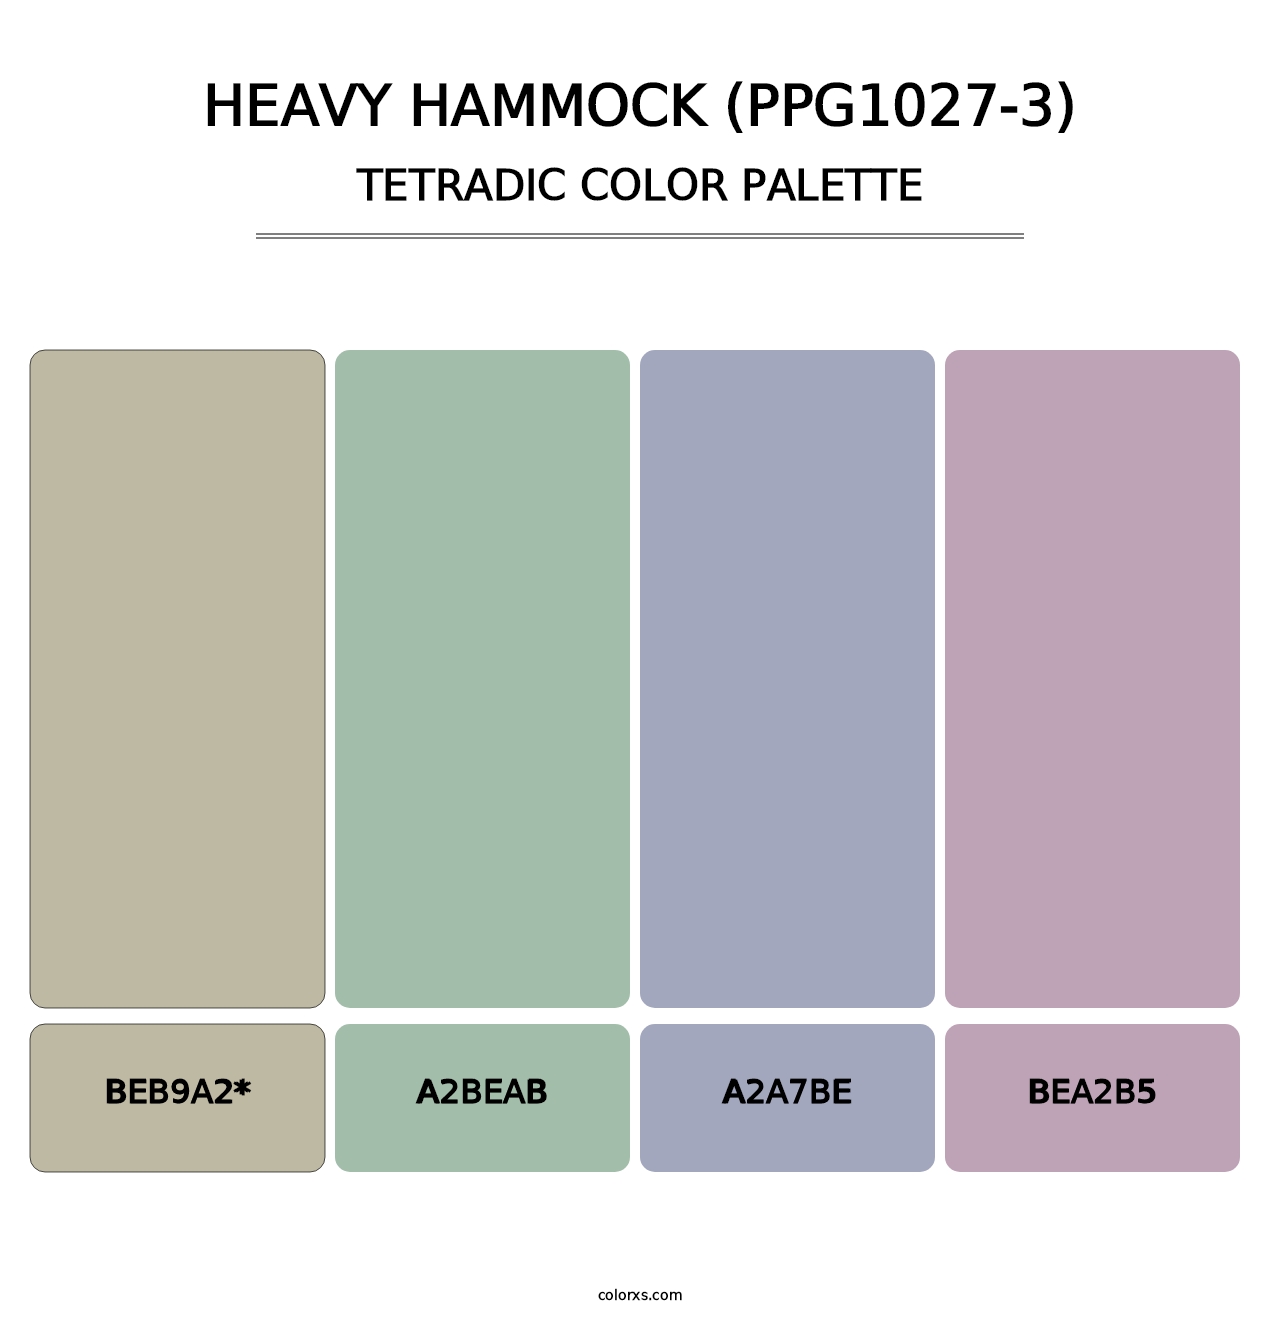 Heavy Hammock (PPG1027-3) - Tetradic Color Palette